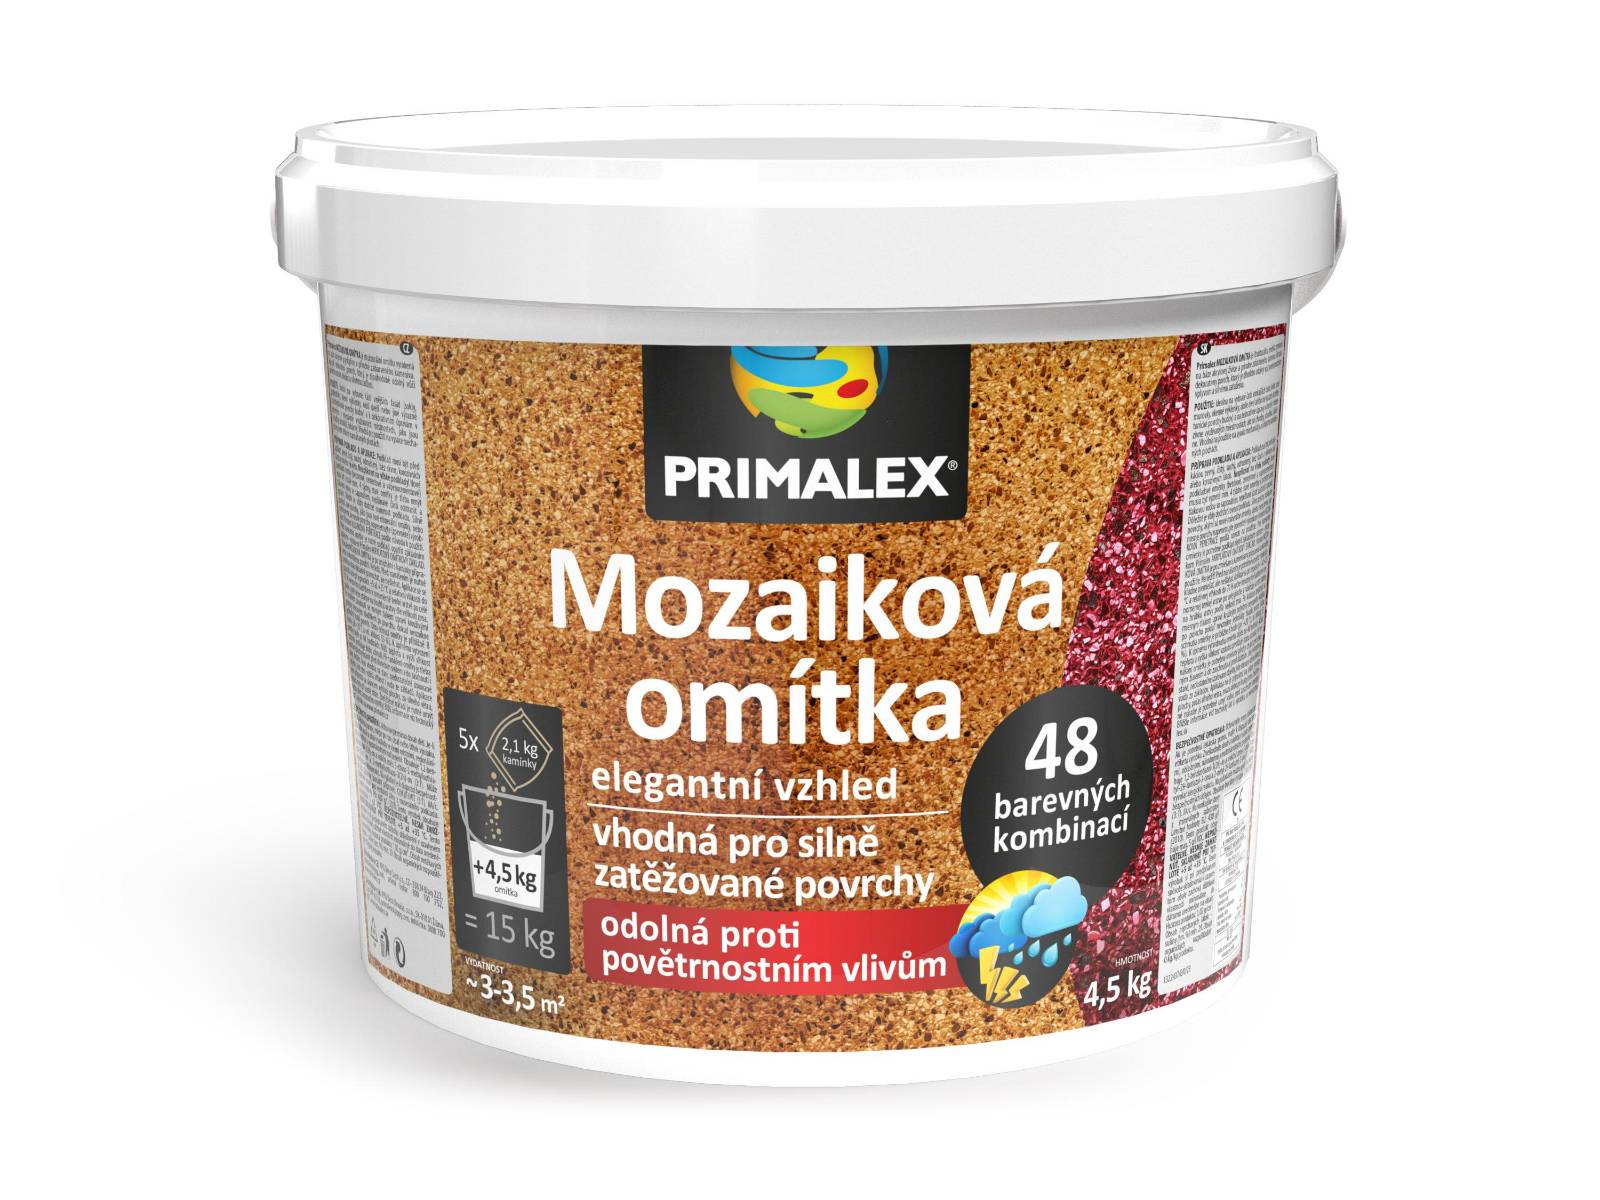 PRIMALEX Mozaiková omietka 15kg (4.5 kg spojivo + 5 x 2.1kg kameniva) mix farieb H+H+H+H+F